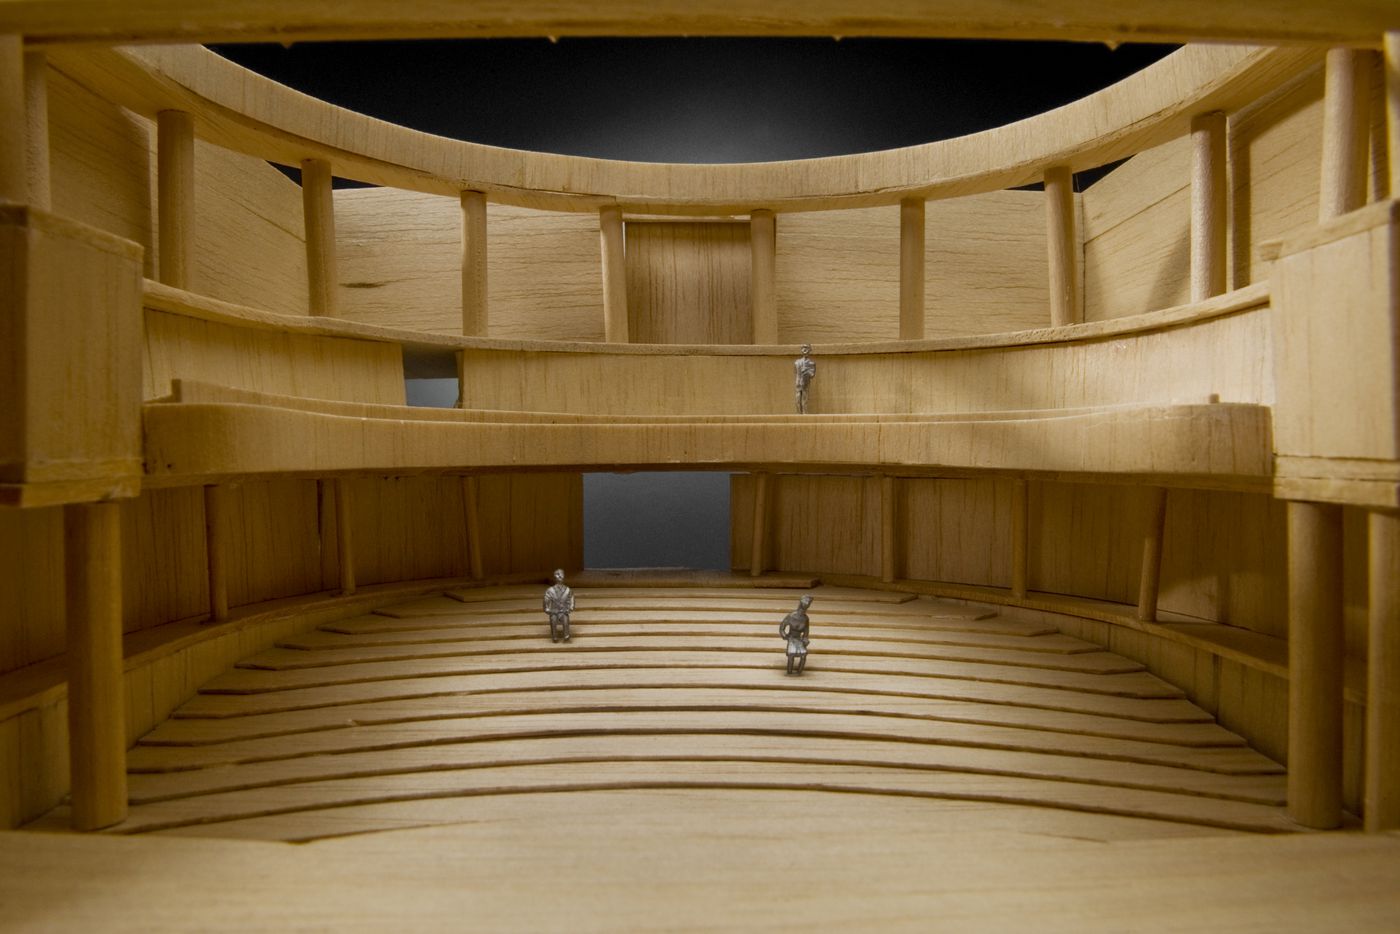 Center for Theatre Arts, Cornell University, Ithaca, New York: study model for alternative scheme for proscenium theatre